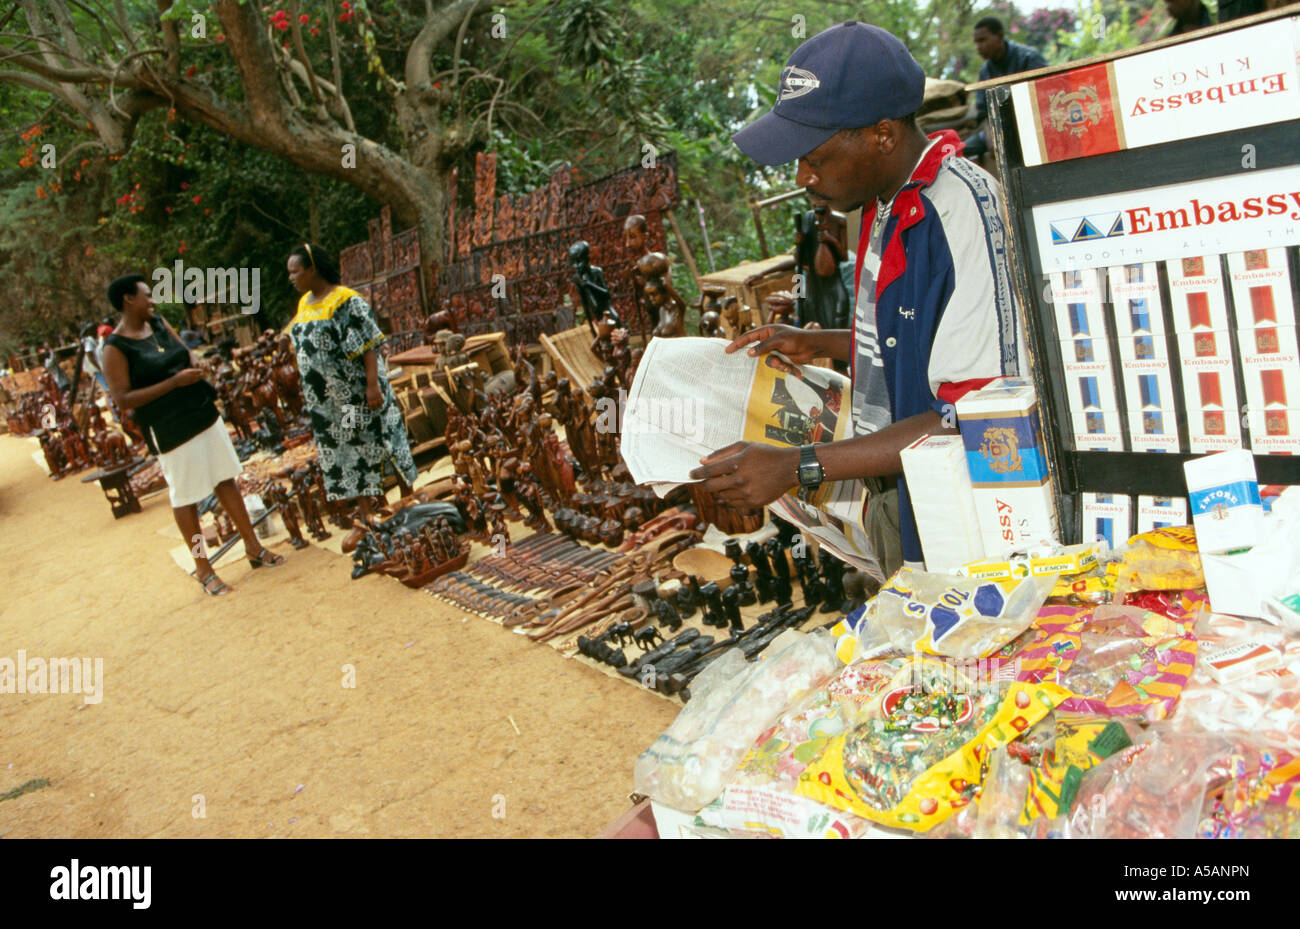 Un marché de rue en Afrique Rwanda Banque D'Images